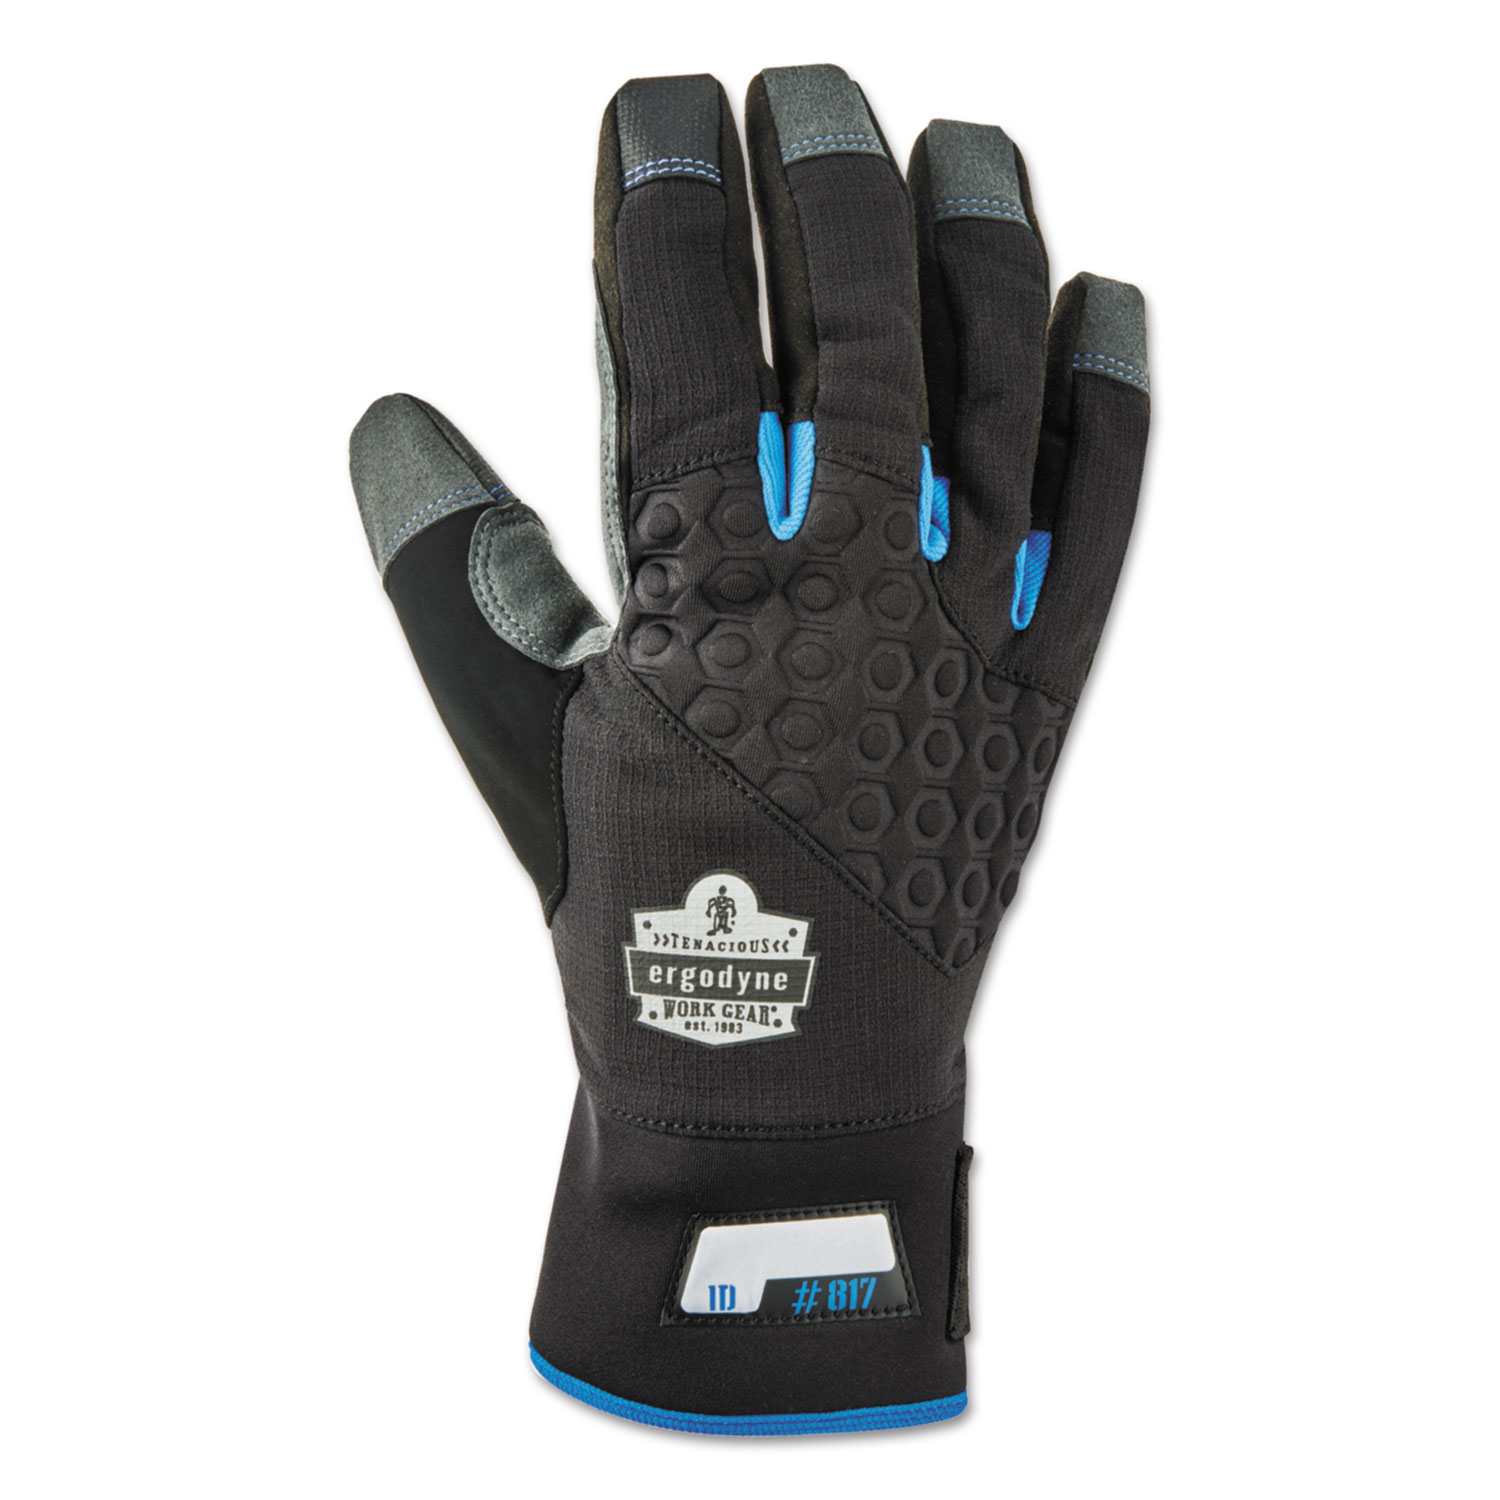  ergodyne 17352 Proflex 817 Reinforced Thermal Utility Gloves, Black, Small, 1 Pair (EGO17352) 